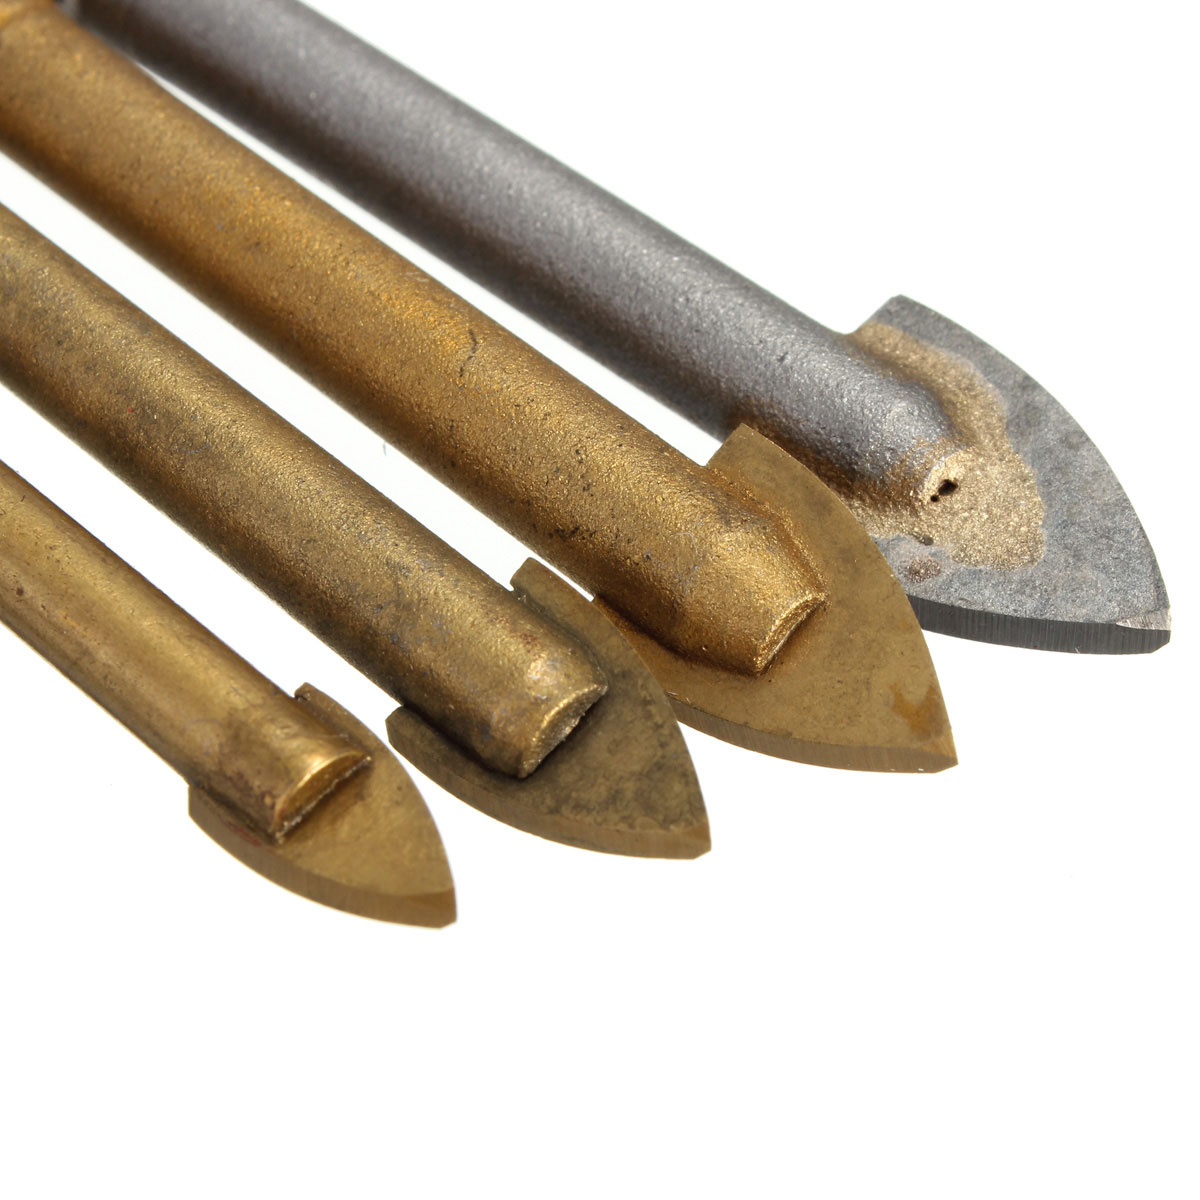 6-12mm-Carbide-Tile-Spear-Head-Drill-Bit-Glass-Drill-Hole-Tool-Tungsten-Carbide-Tipped-Bit-978952-6